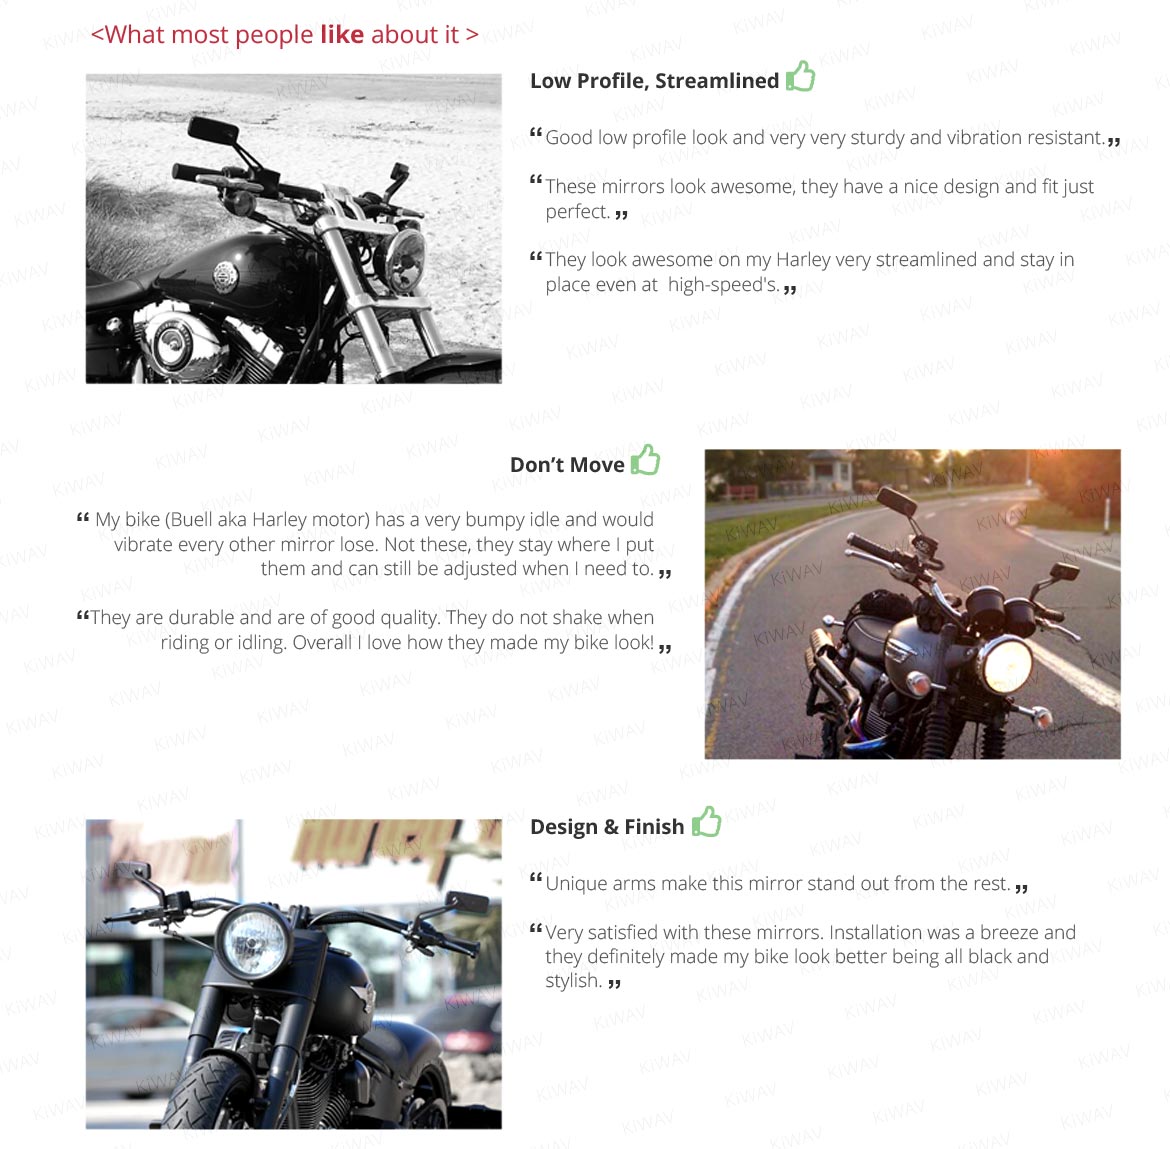 KiWAV Magazi Classic motorcycle mirror series for Harley street 500 / 750